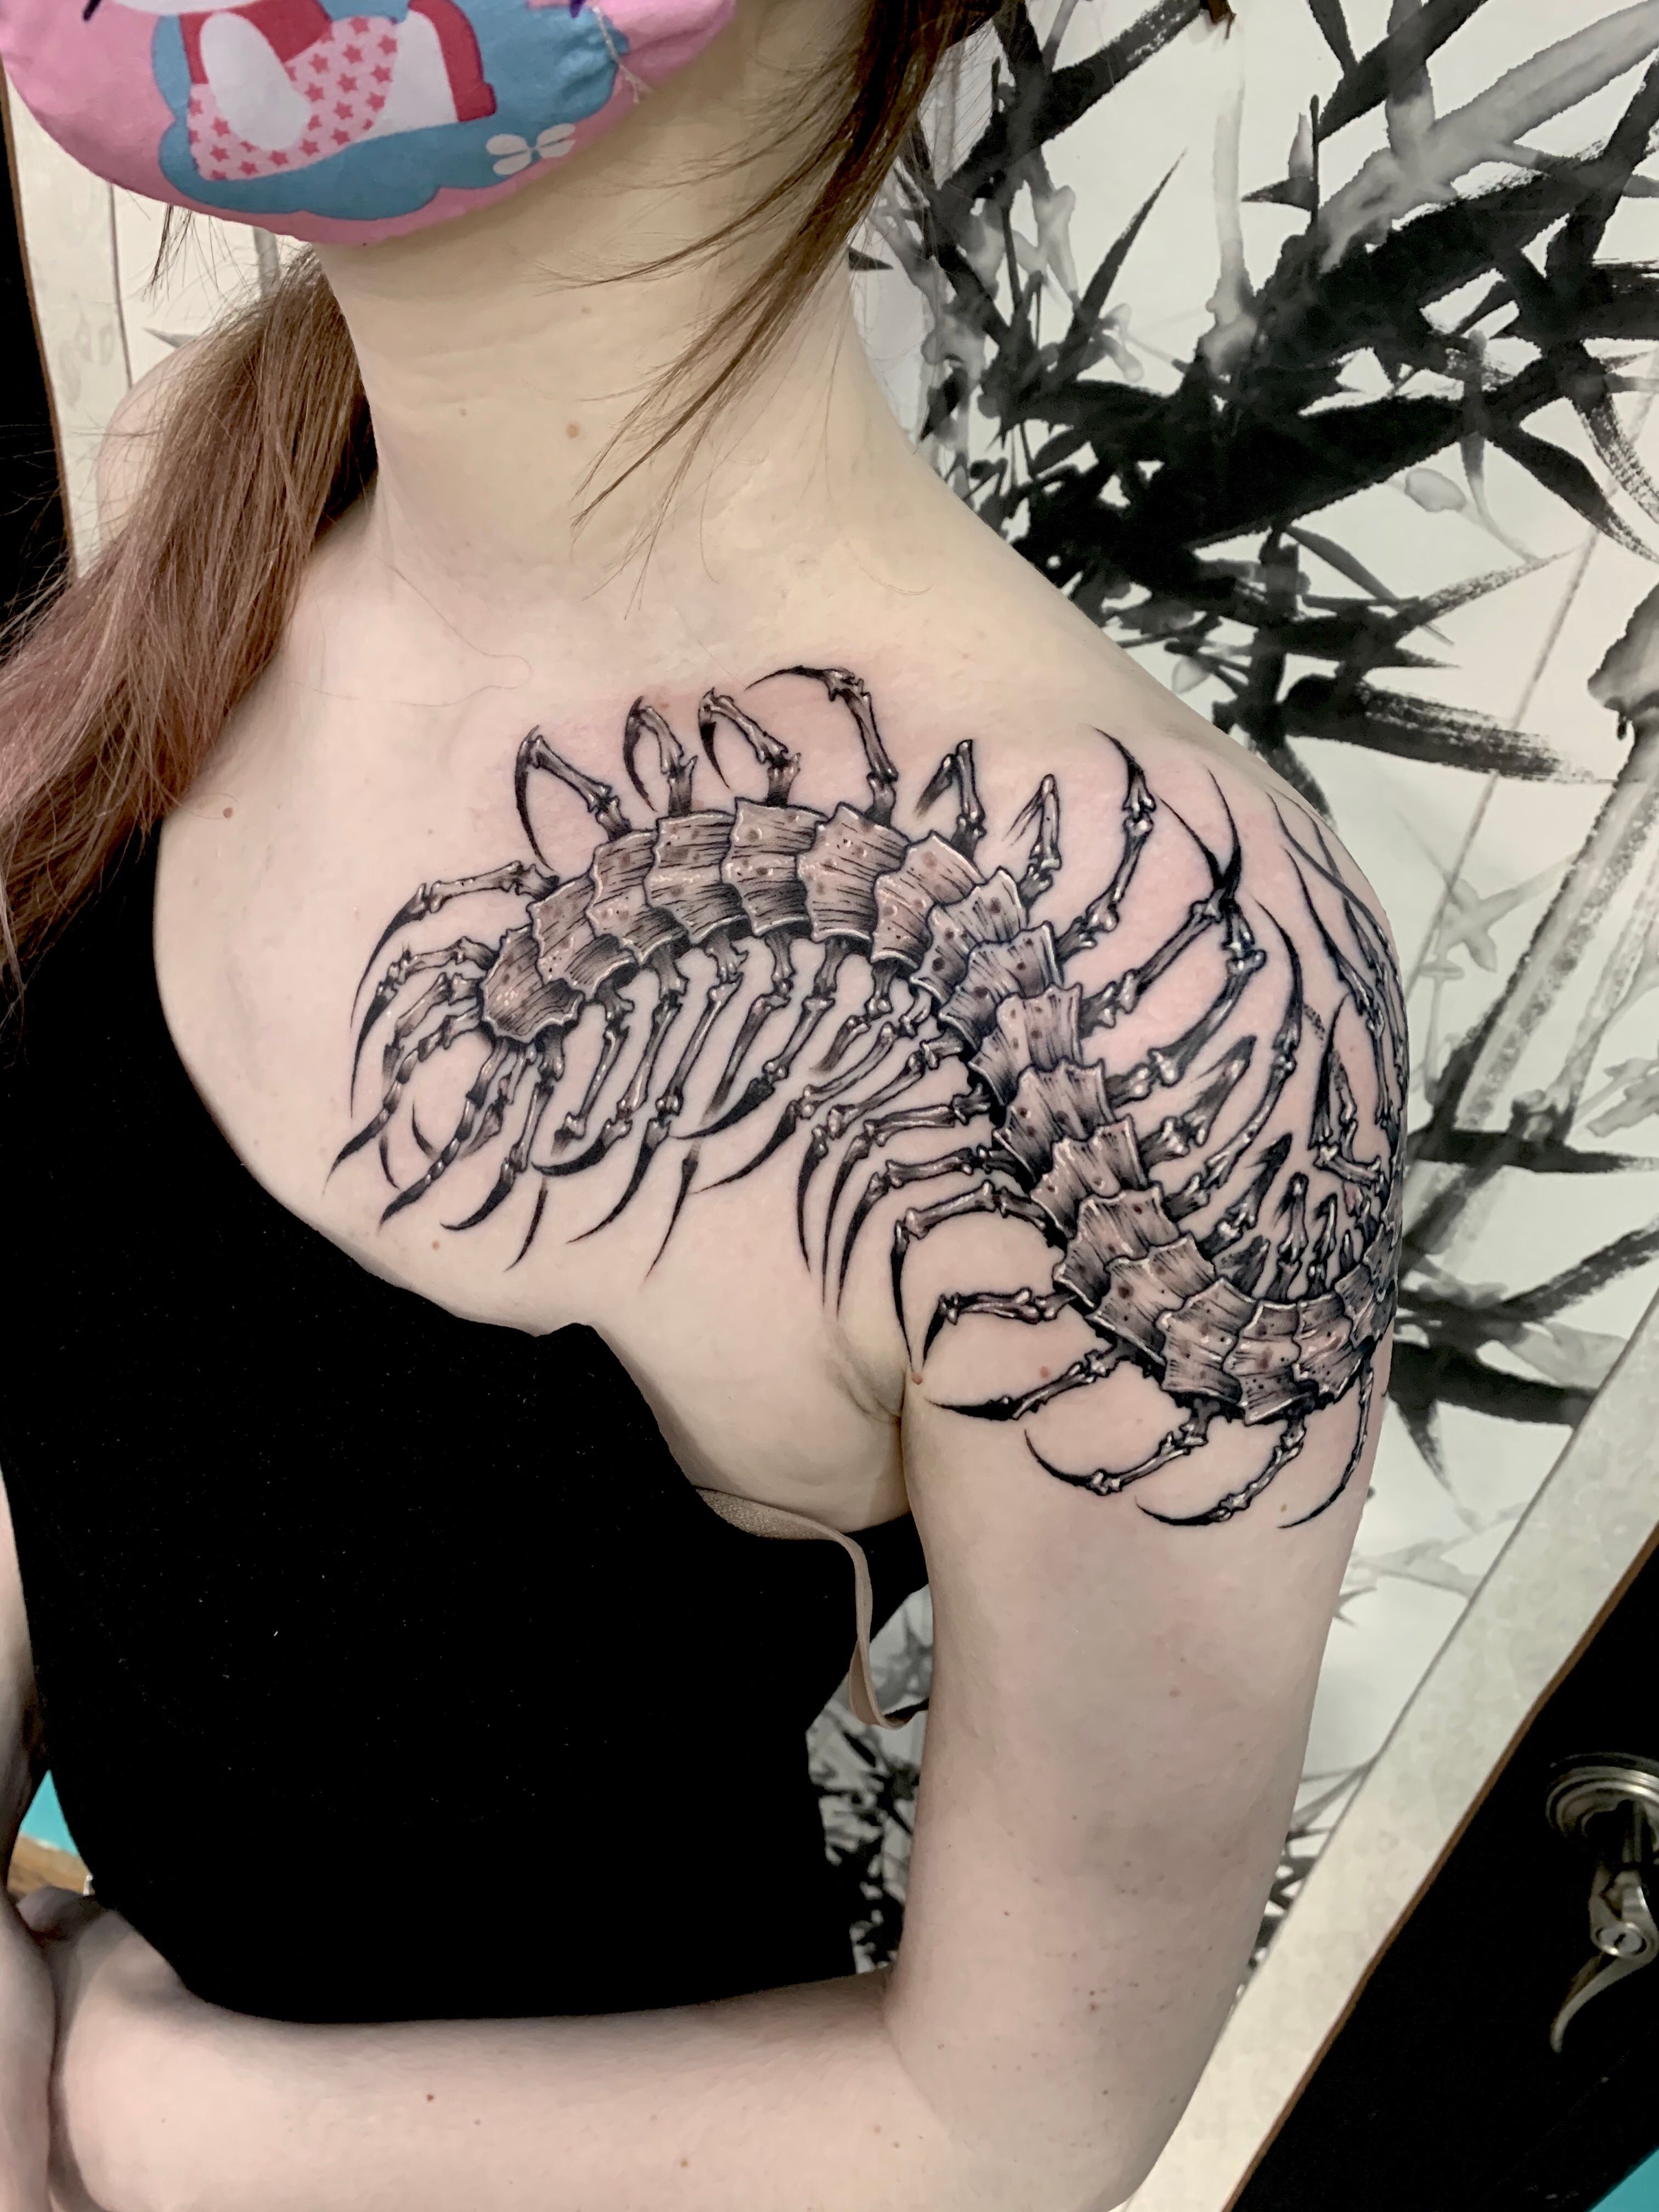 Creepy Crawlers Centipede Tattoo Designs That Make a Statement  Psycho  Tats